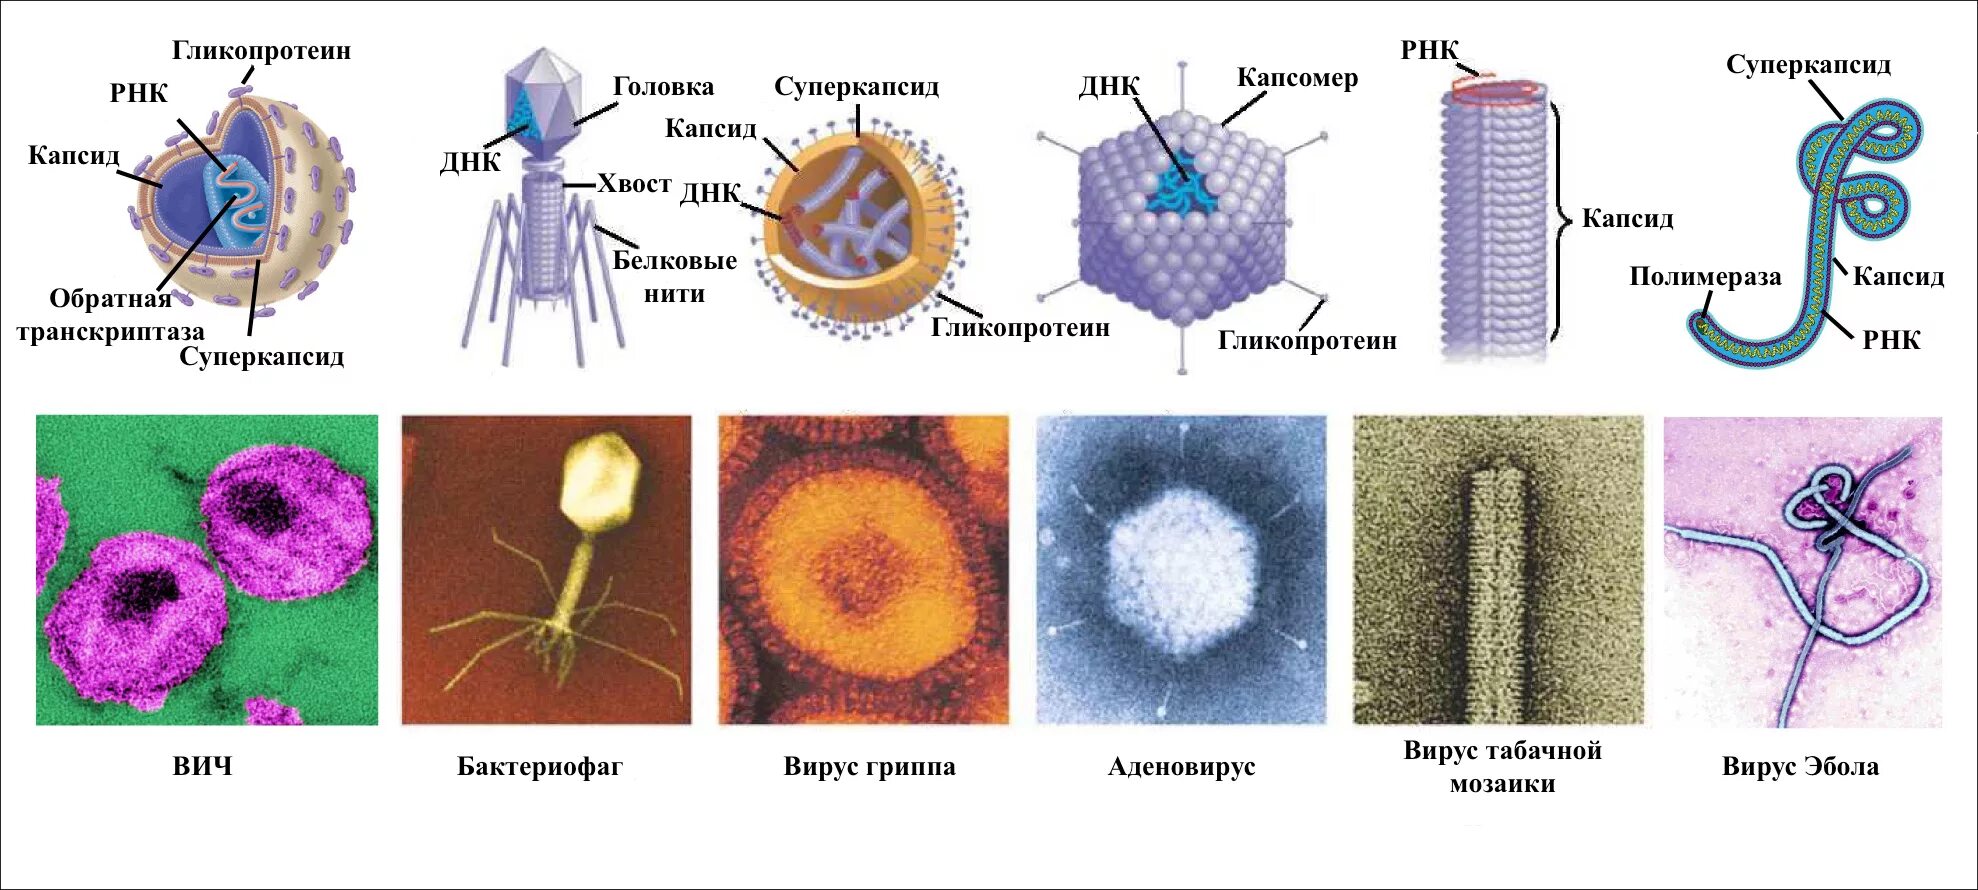 Вирус ковид отнесен. Классификация вирусов по форме биология. Микробиология строение бактерии и вирусов. Вирусы многообразие строения вирусов. Формы микроорганизмов вирусы.